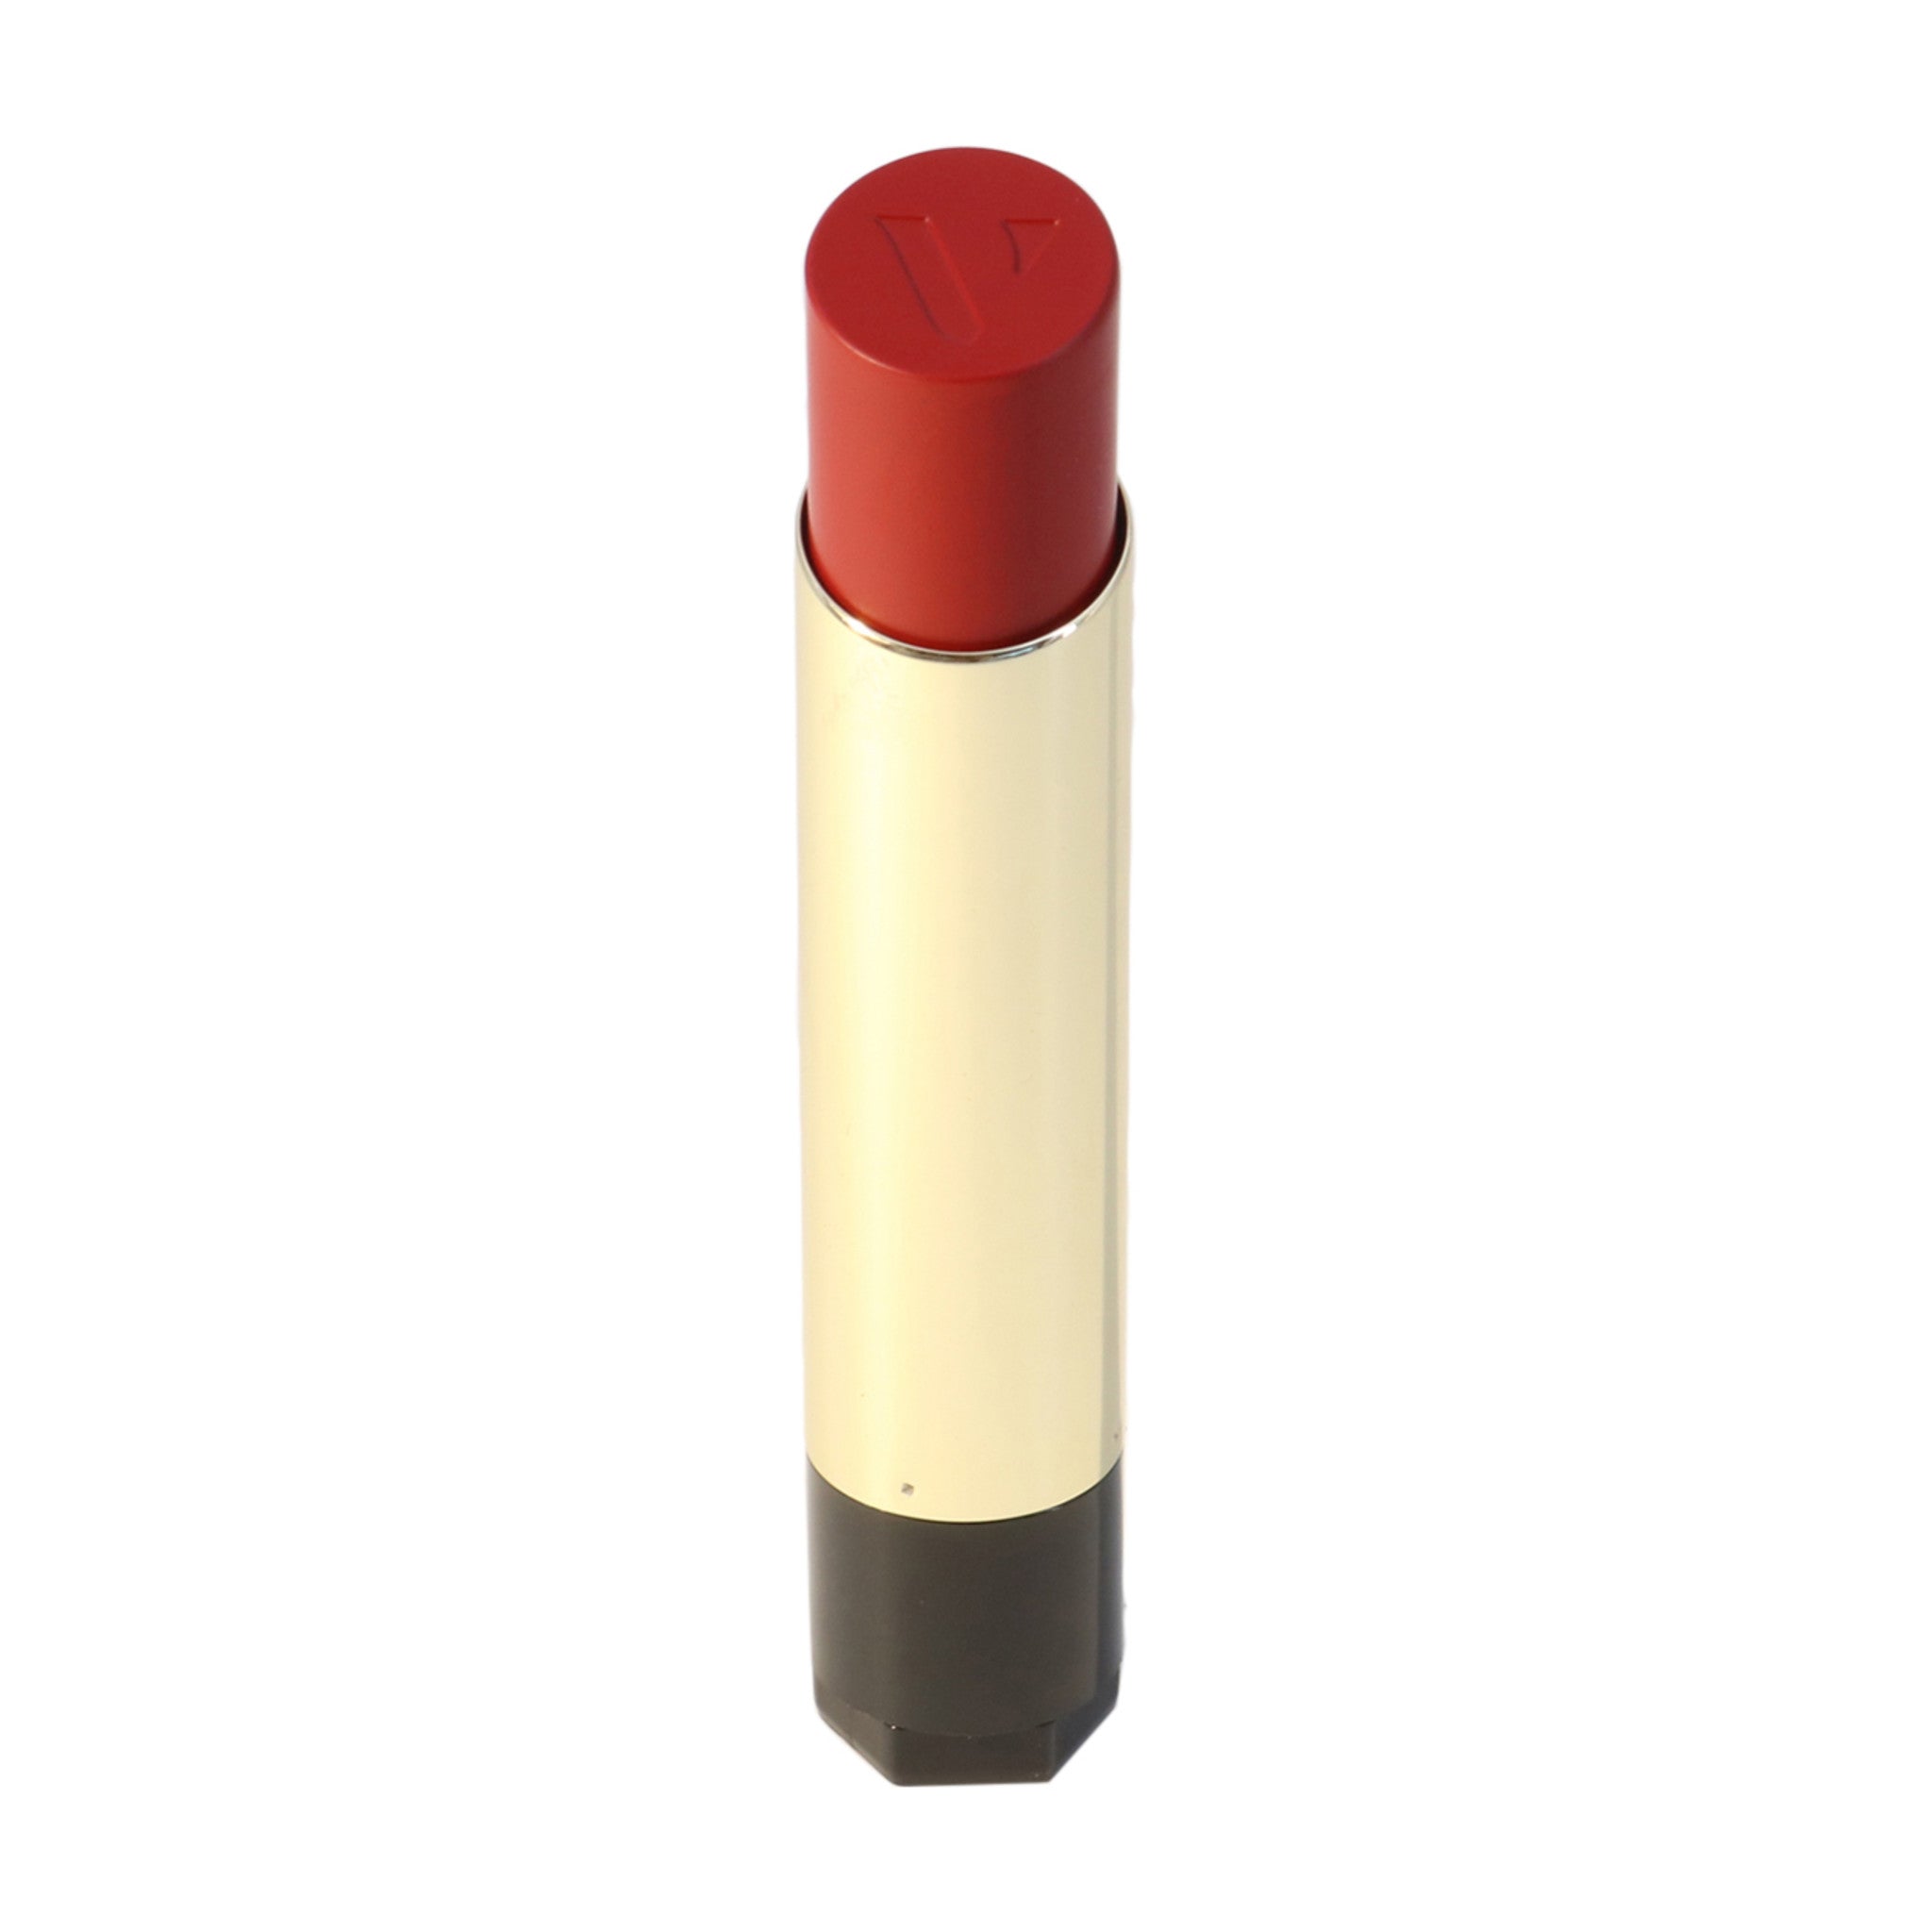 Valde Ritual Lipstick Refill Color/Shade variant: Power main image.